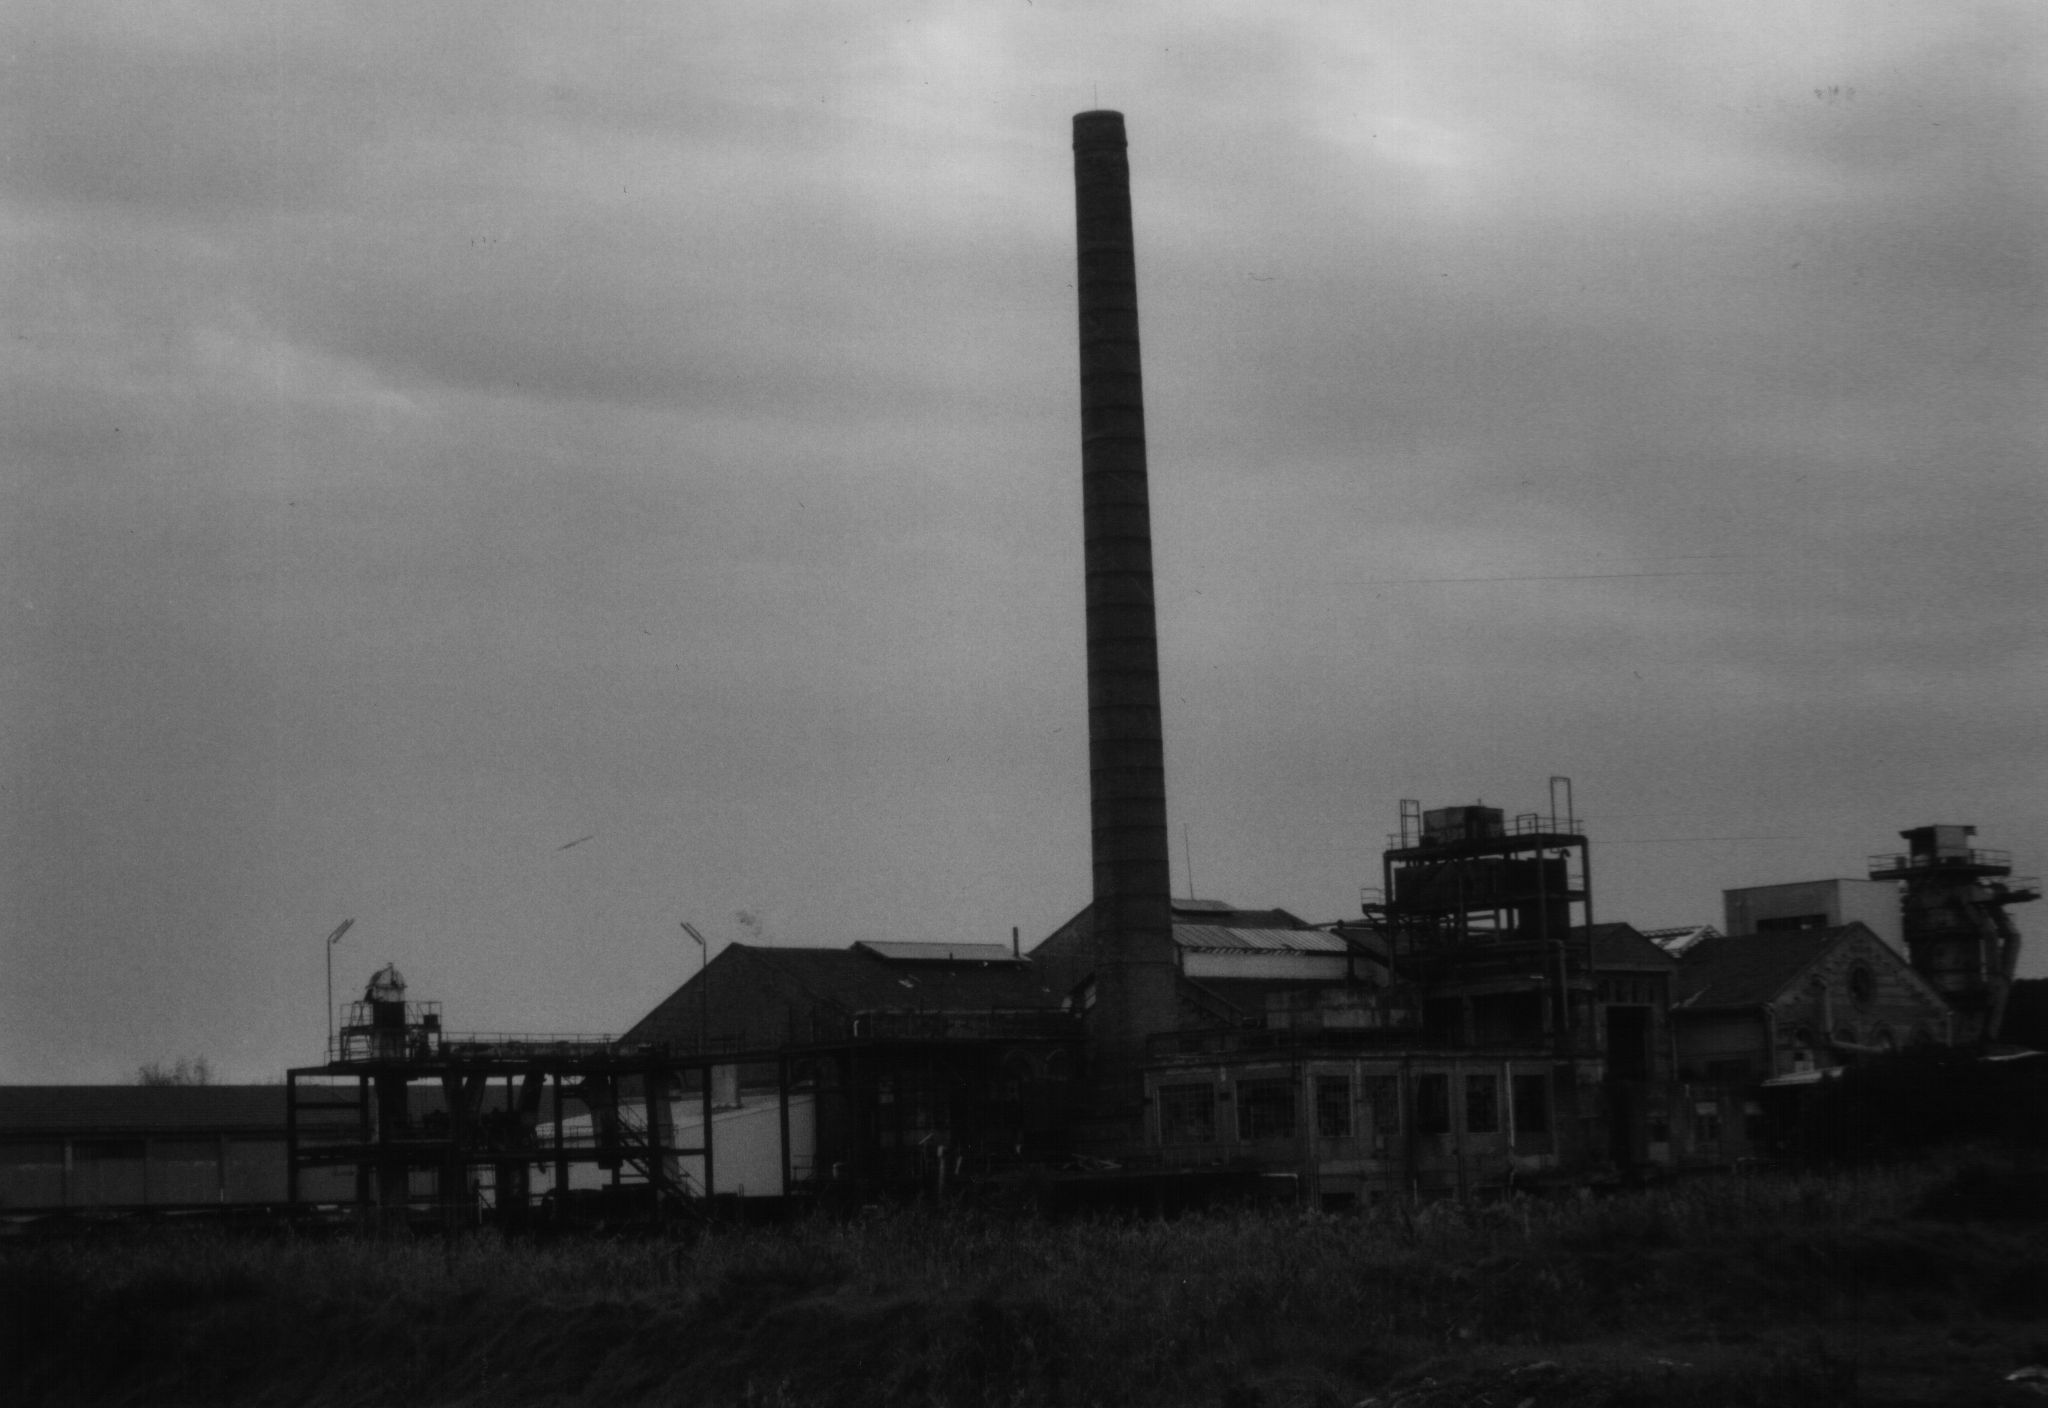 Ex zuccherificio Etruria (impianto industriale, zuccherificio) - Cecina (LI) 